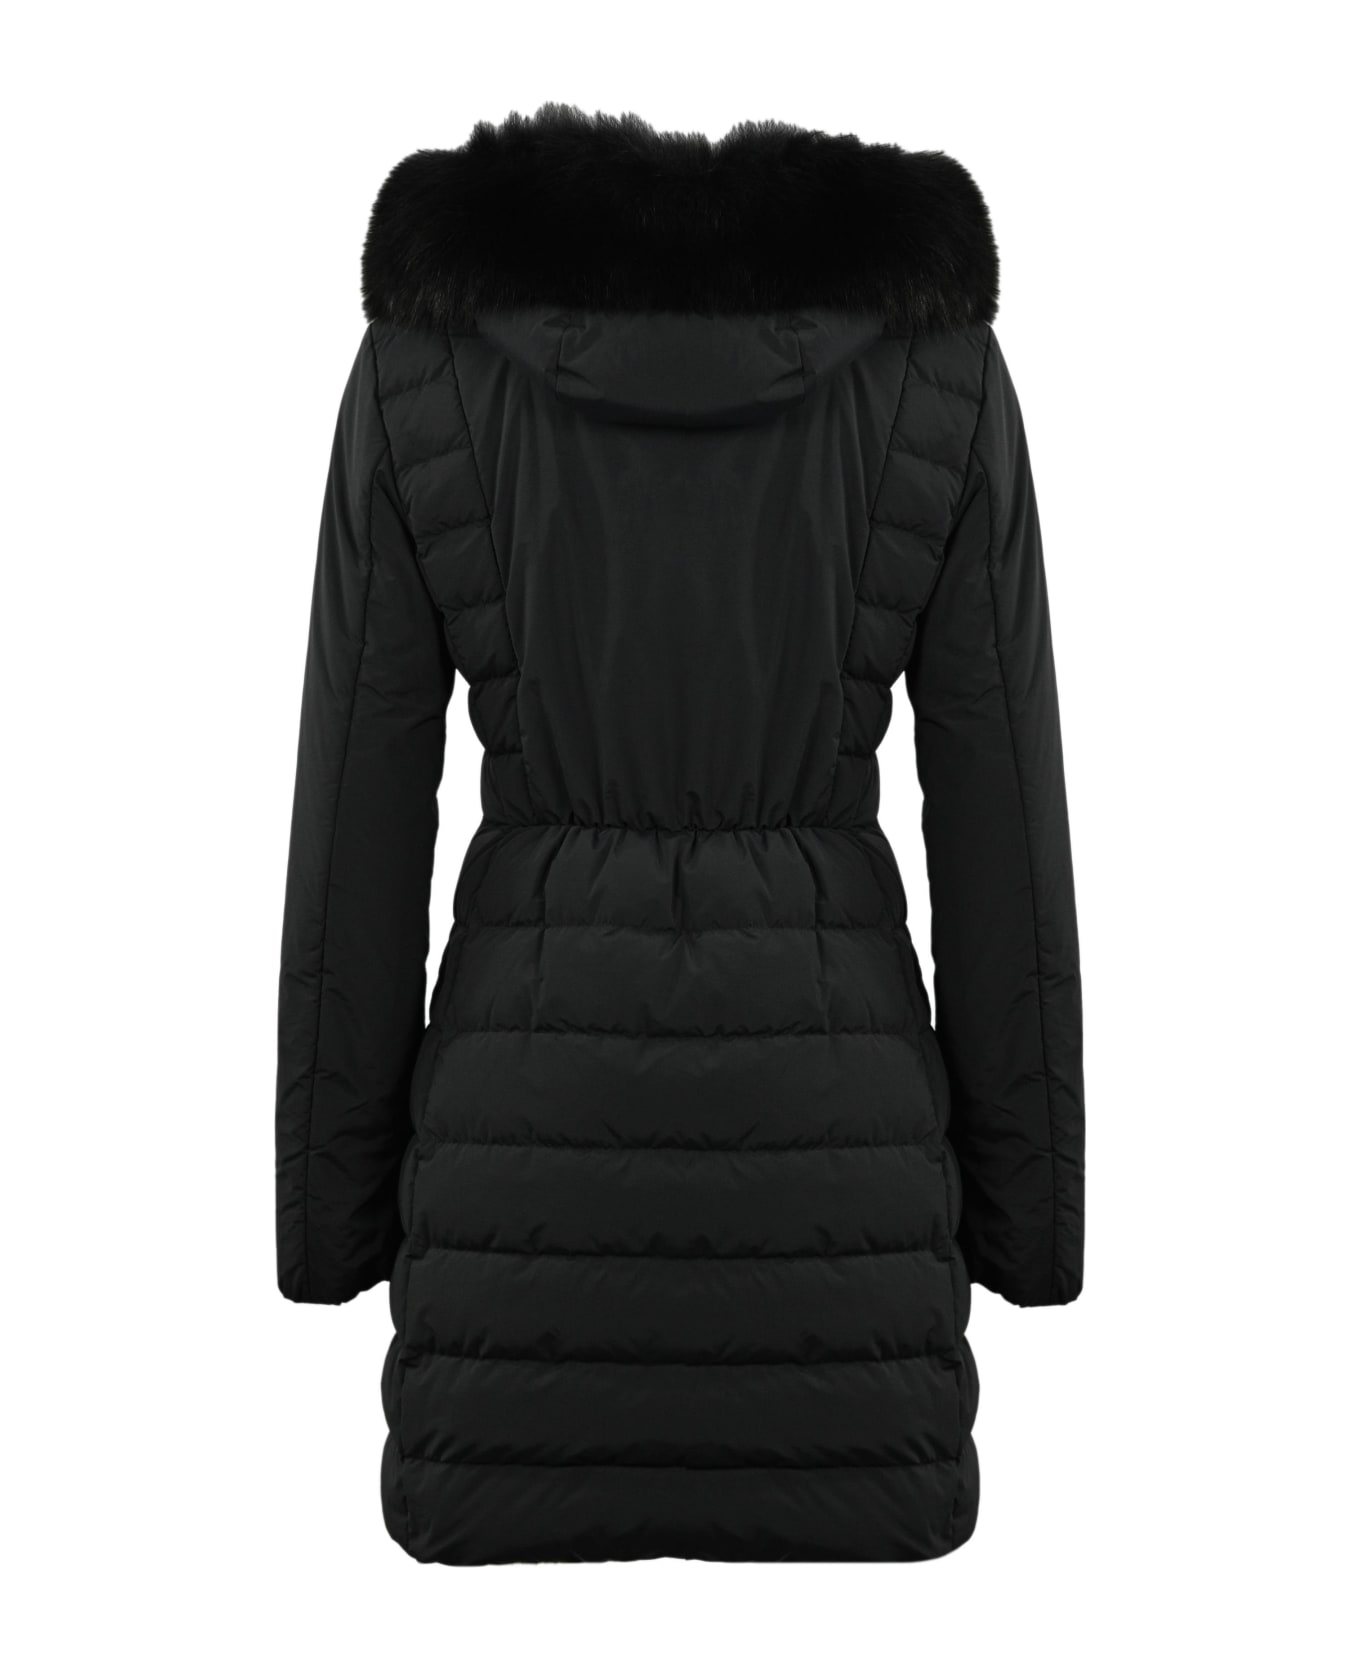 Peuterey Down Jacket With Fur Seriola Ml 04 Fur - Black コート